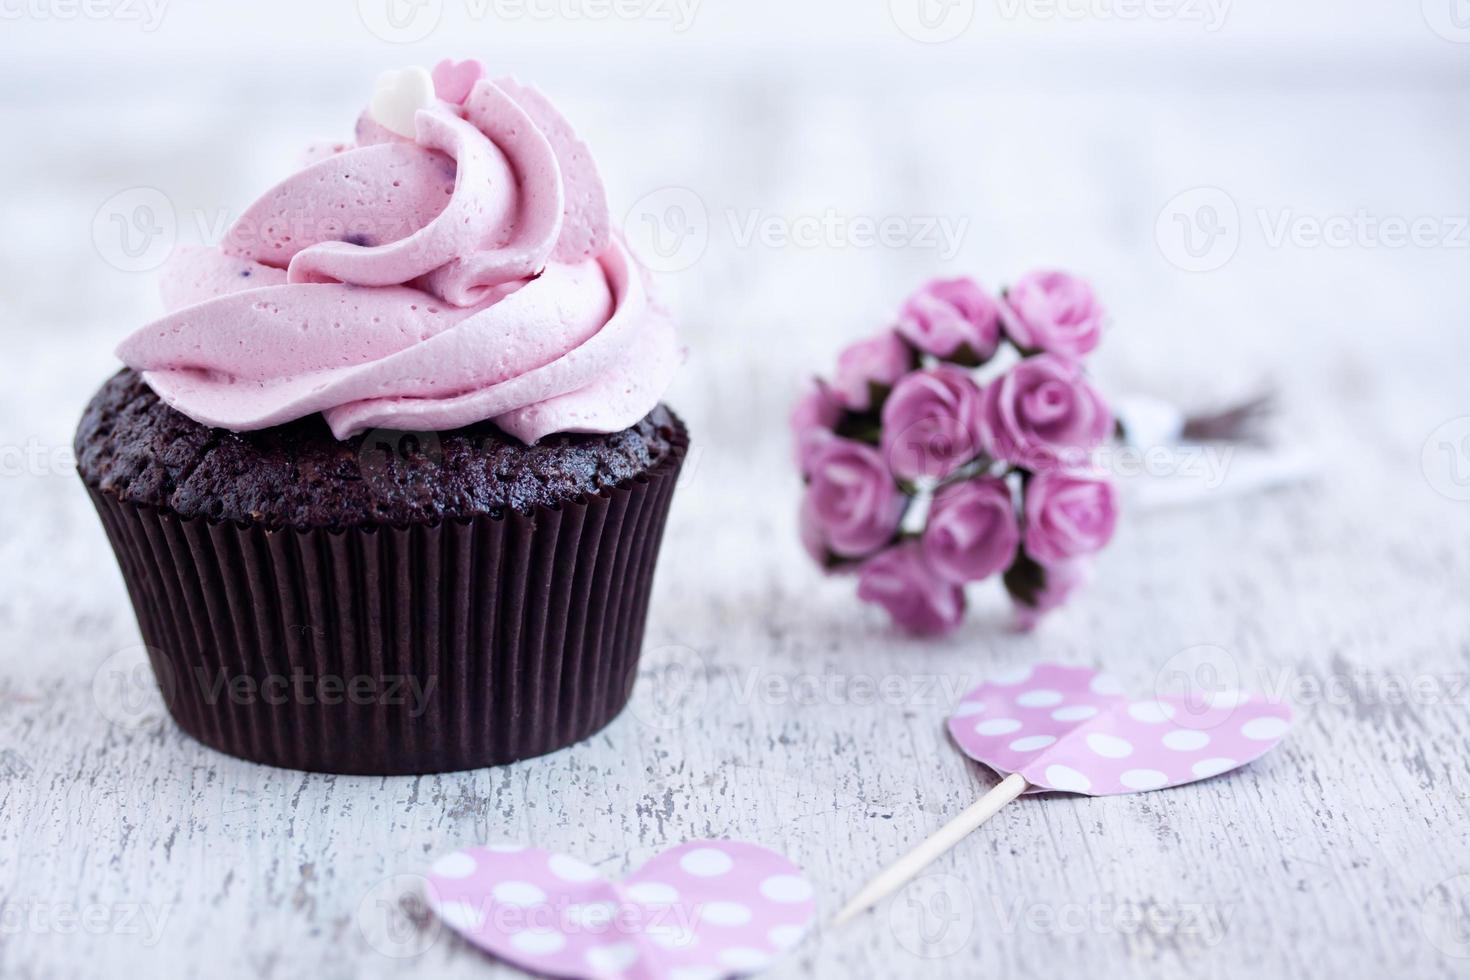 cupcake de chocolate rosa foto